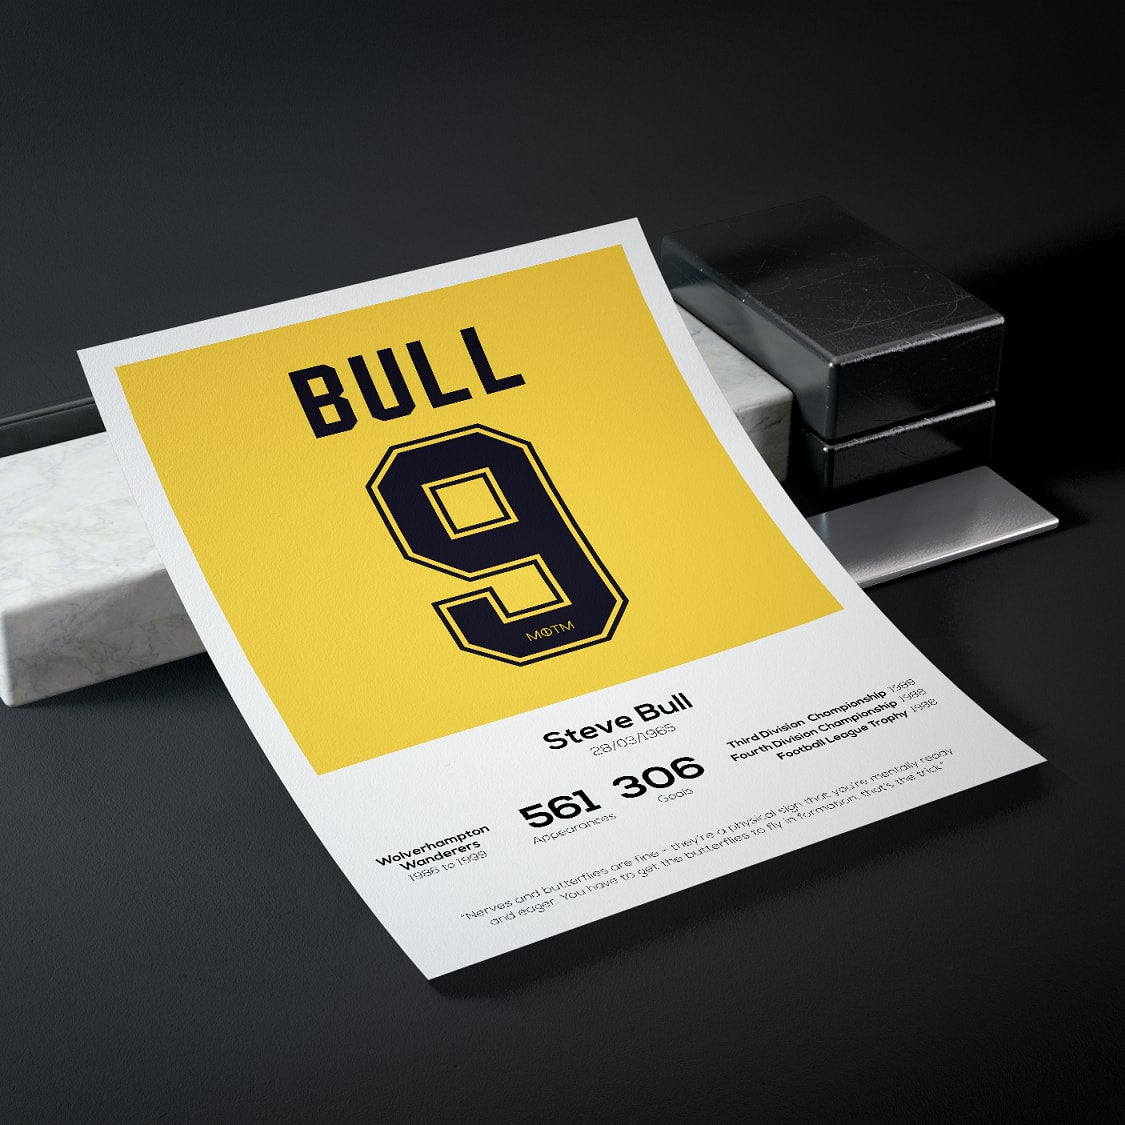 Steve Bull Wolves Legend Stats Print - Man of The Match Football